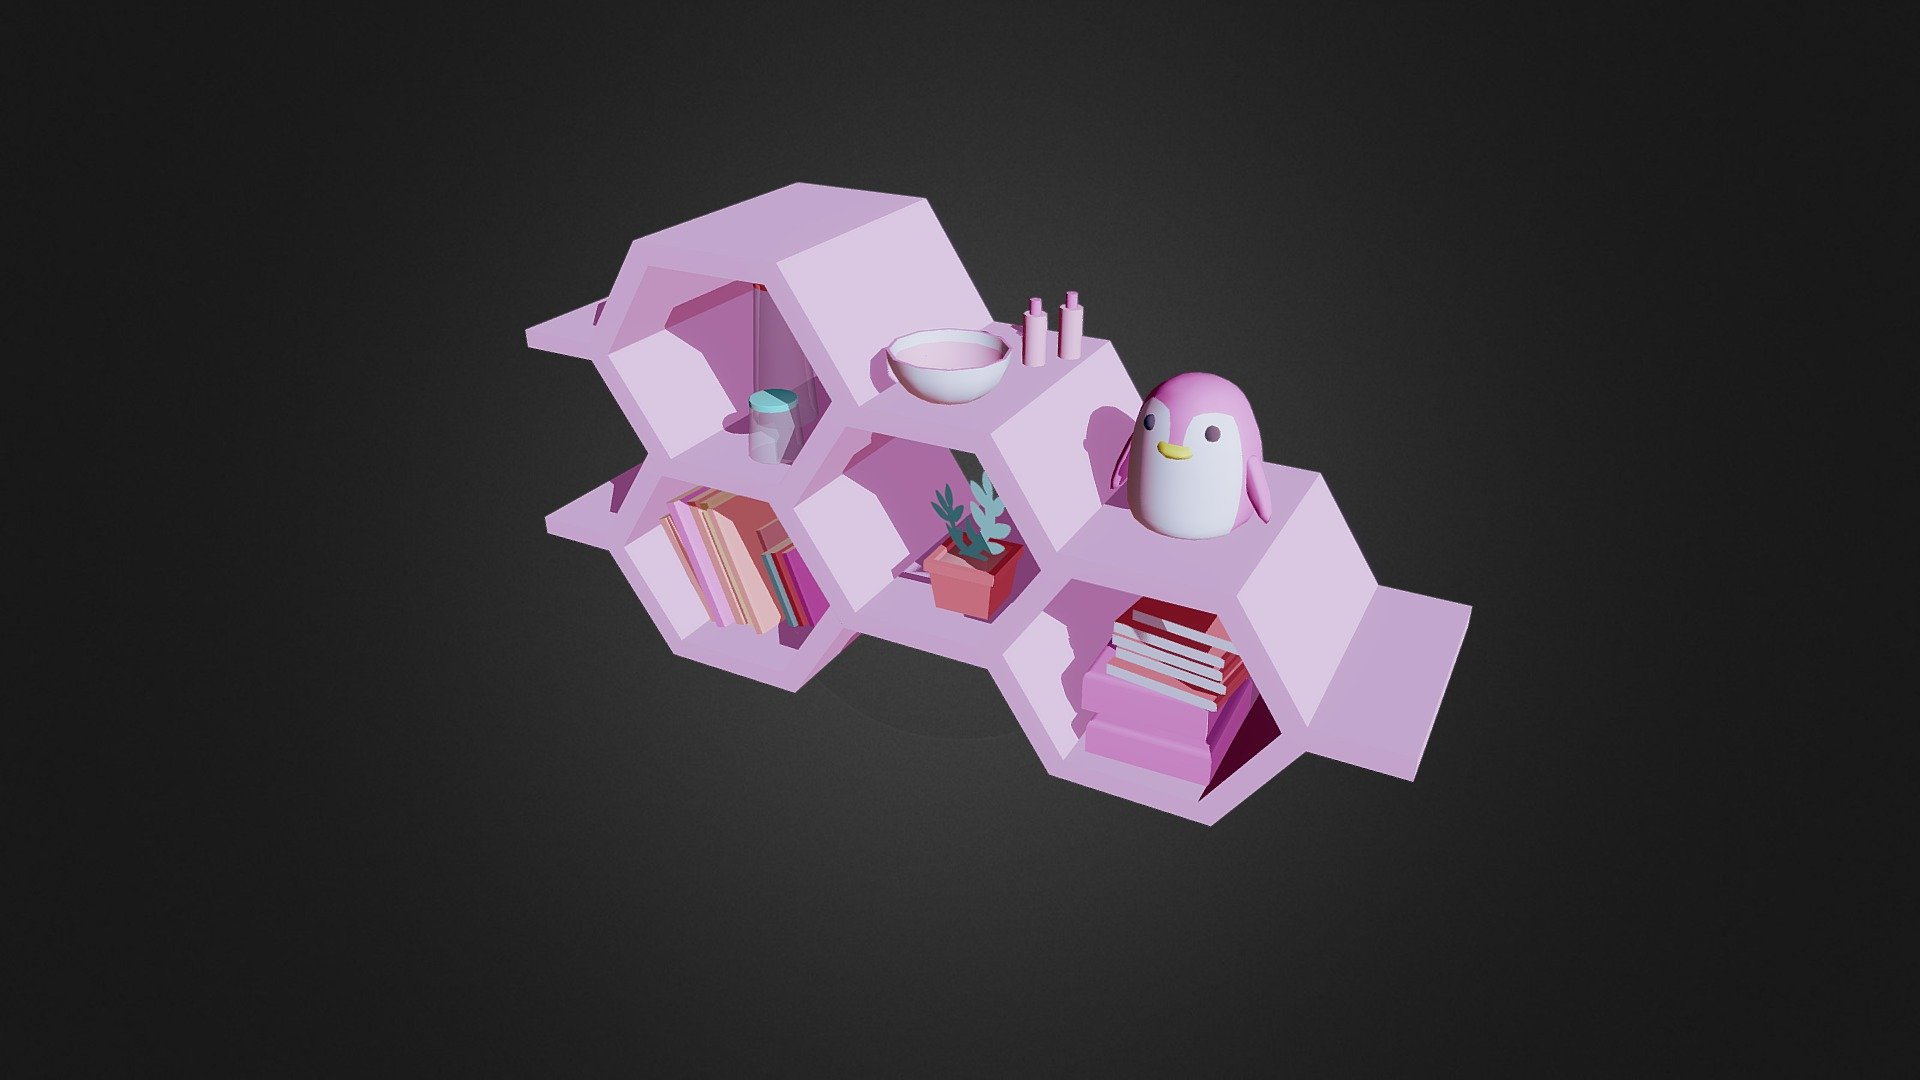 Part of Nadeko's room - Hexagon Shelves - 3D model by jdinutella 3d model